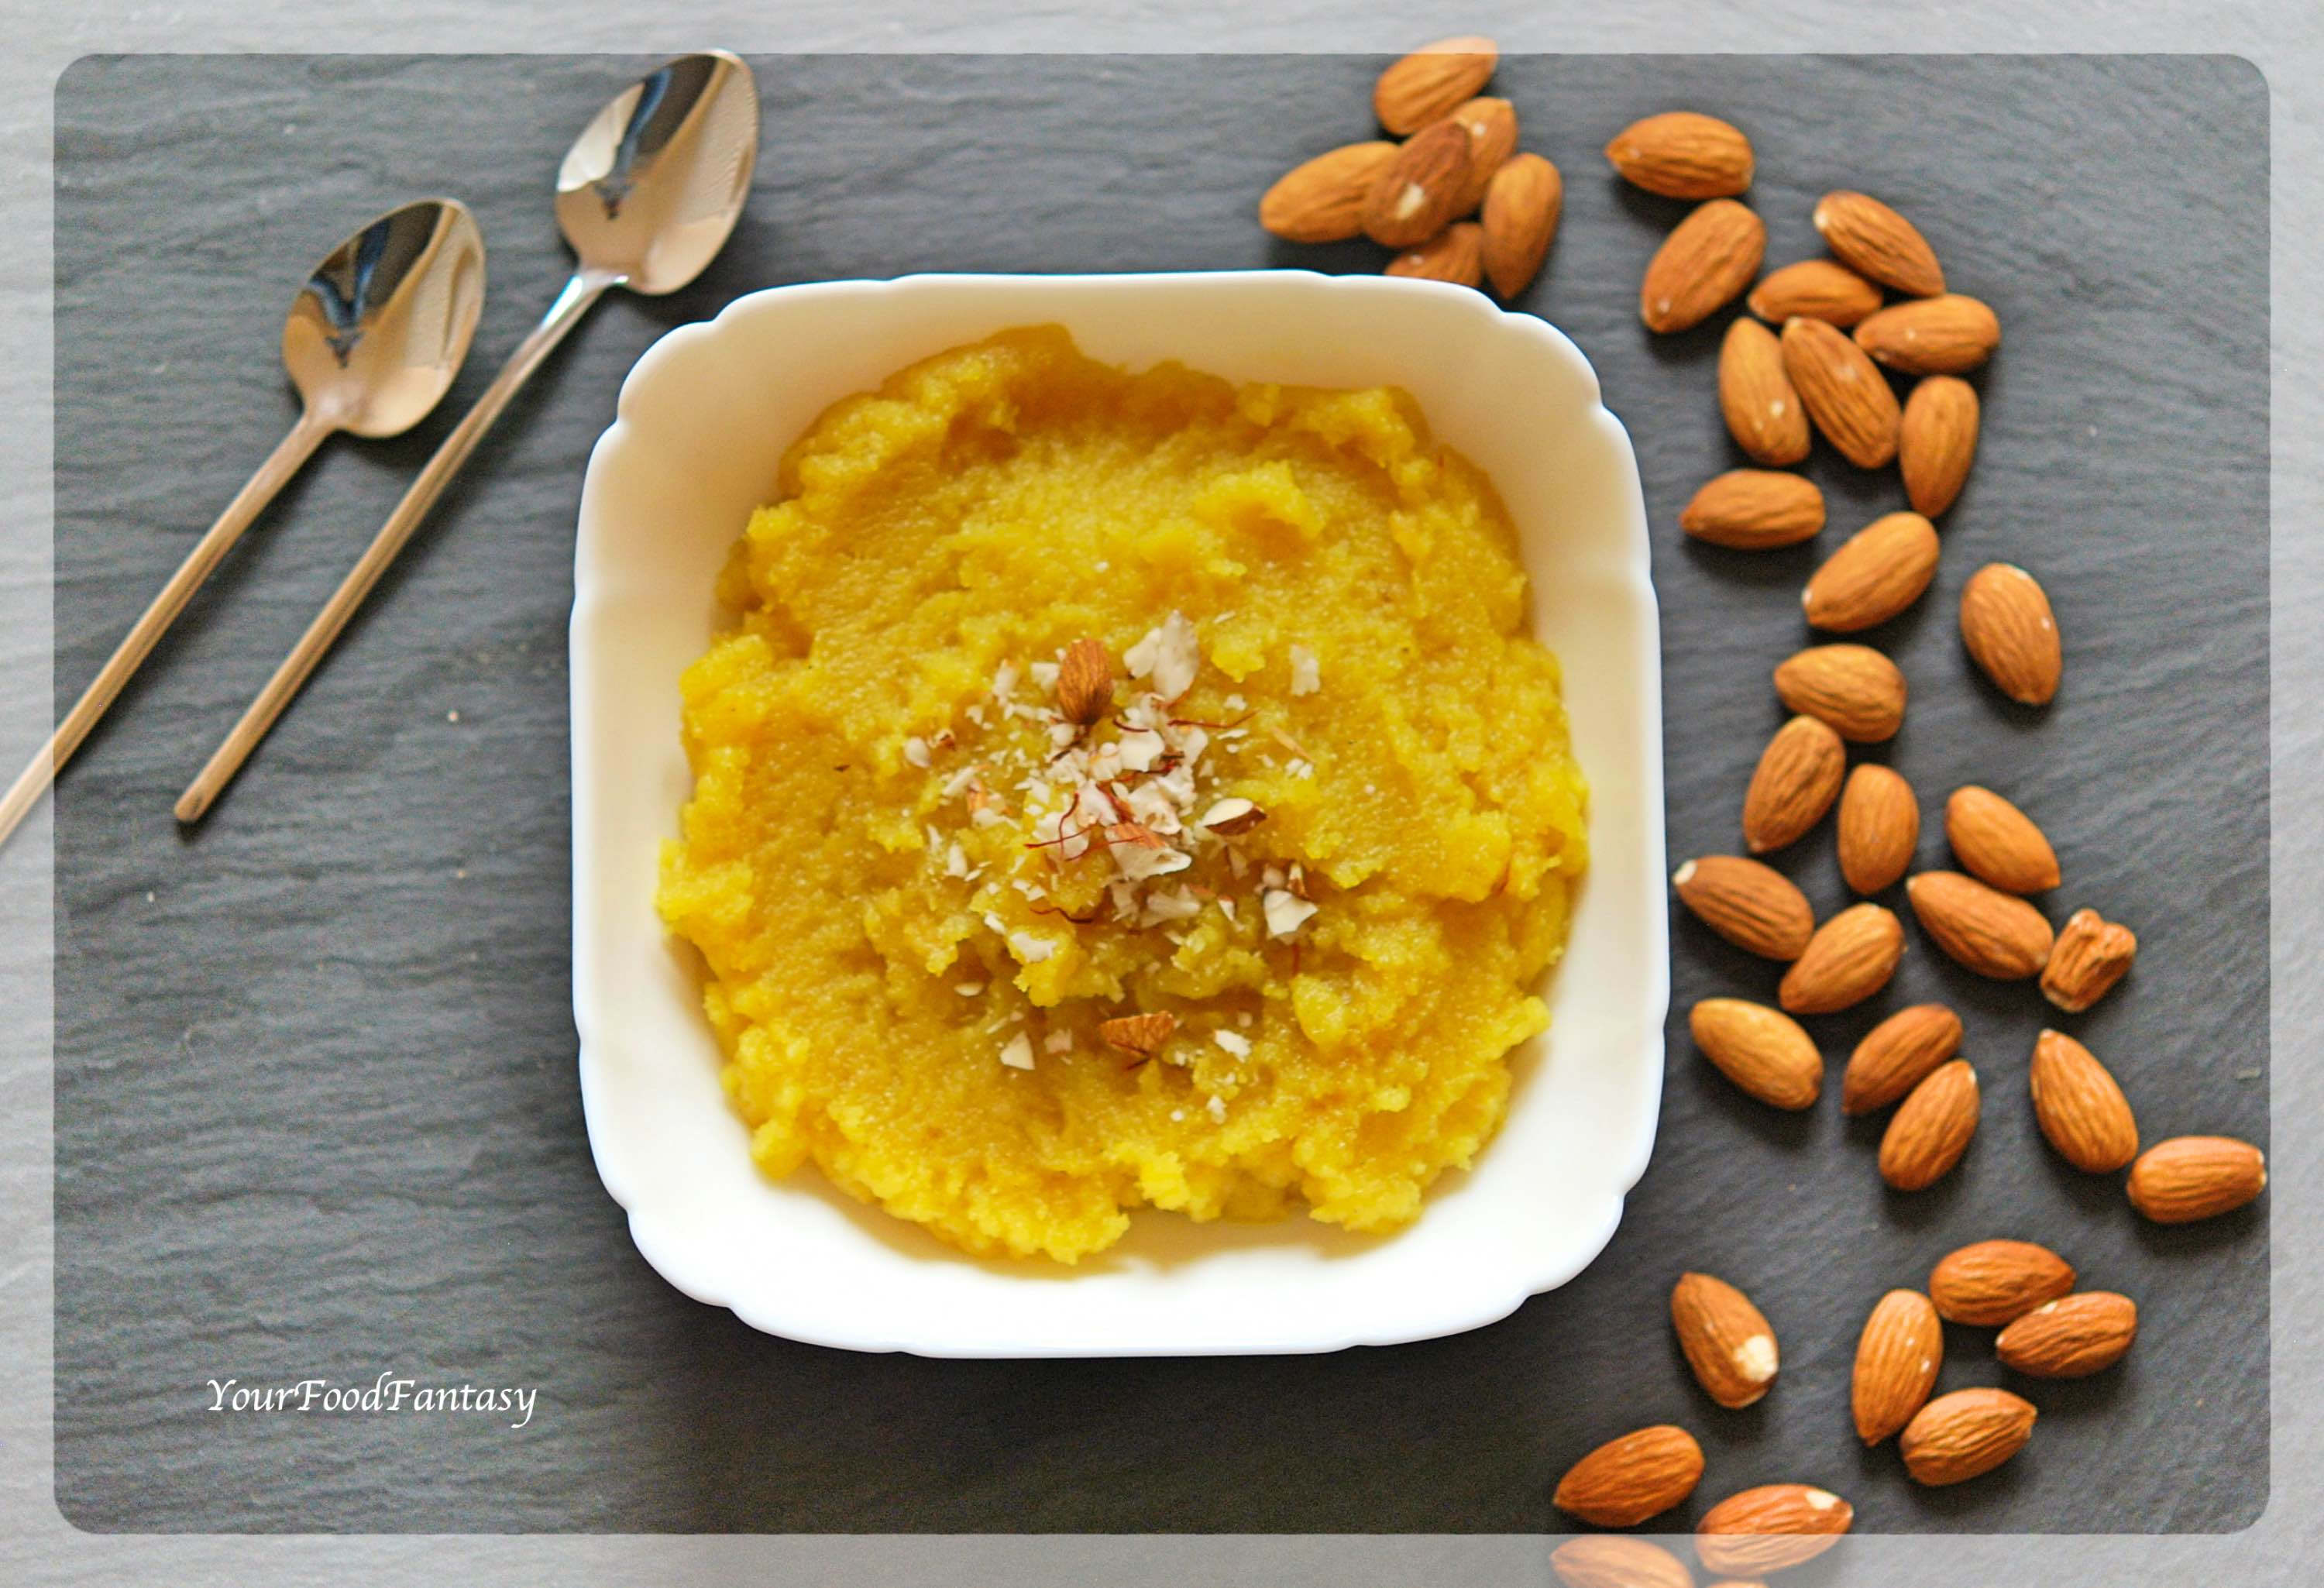 Badam Almond Halwa Recipe | Your Food Fantasy